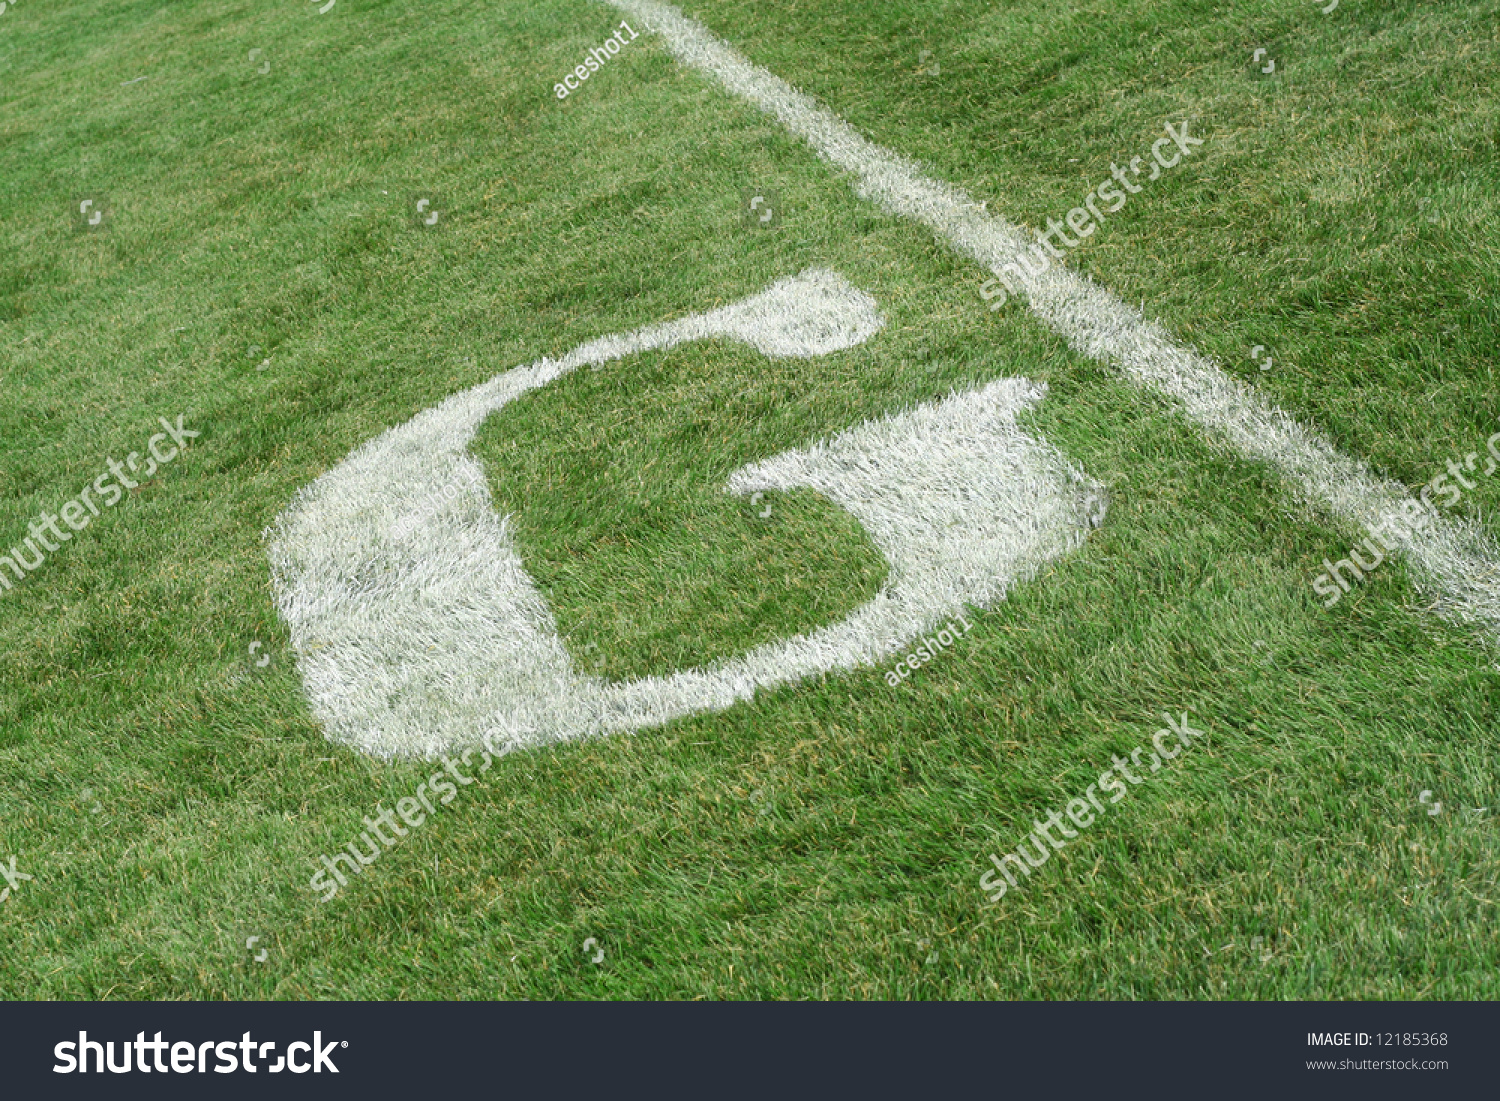 Goal Line On A Football Field Stock Photo 12185368 : Shutterstock